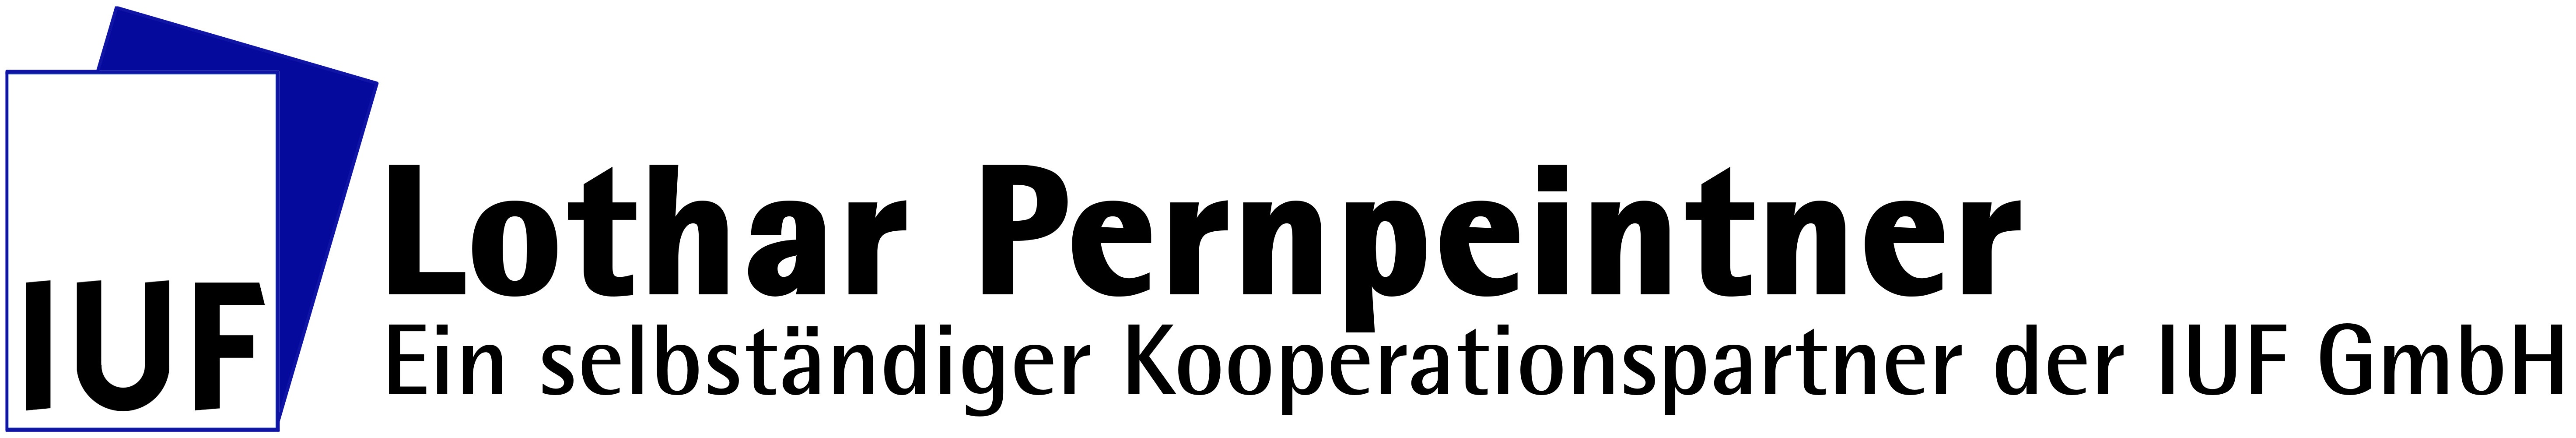 Lothar Pernpeintner (Logo)